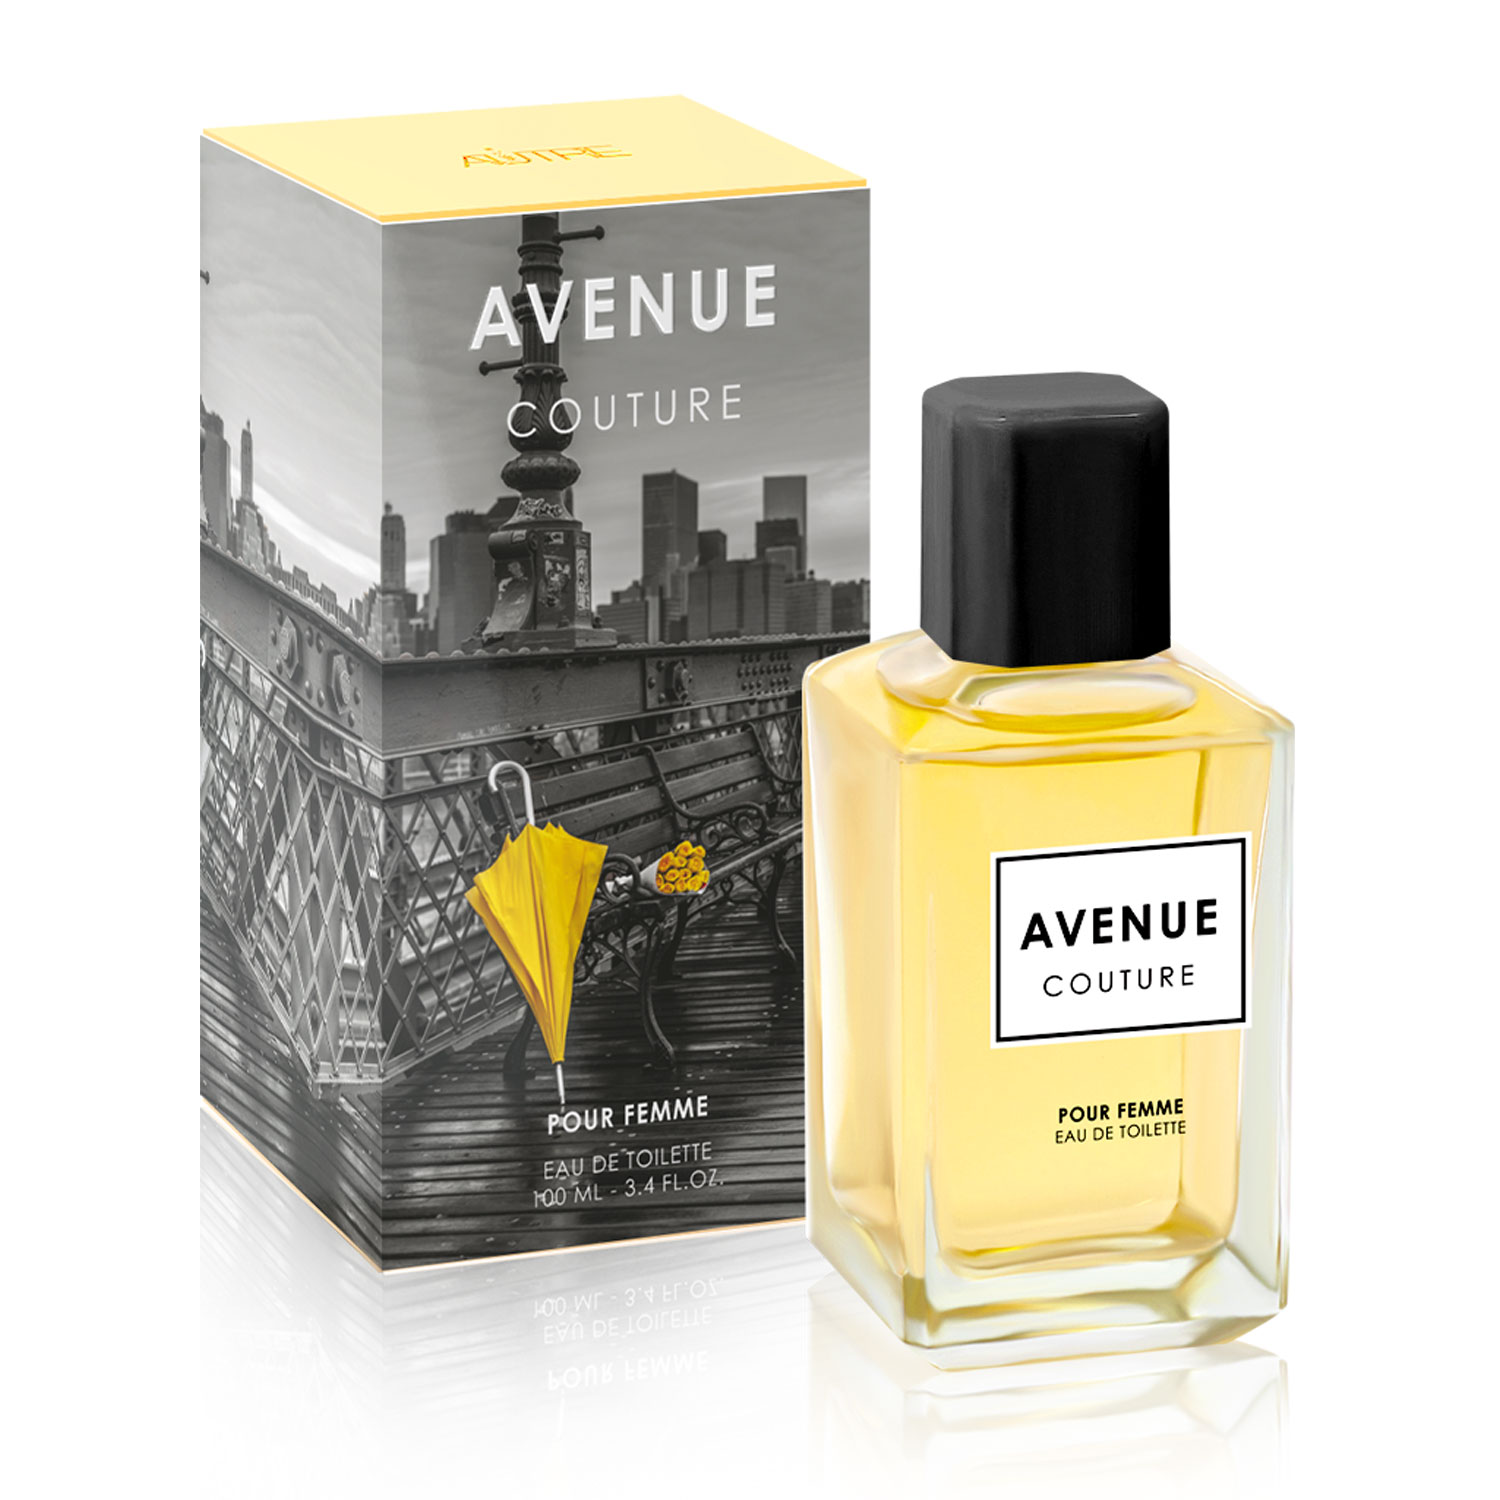 Avenue Couture perfume